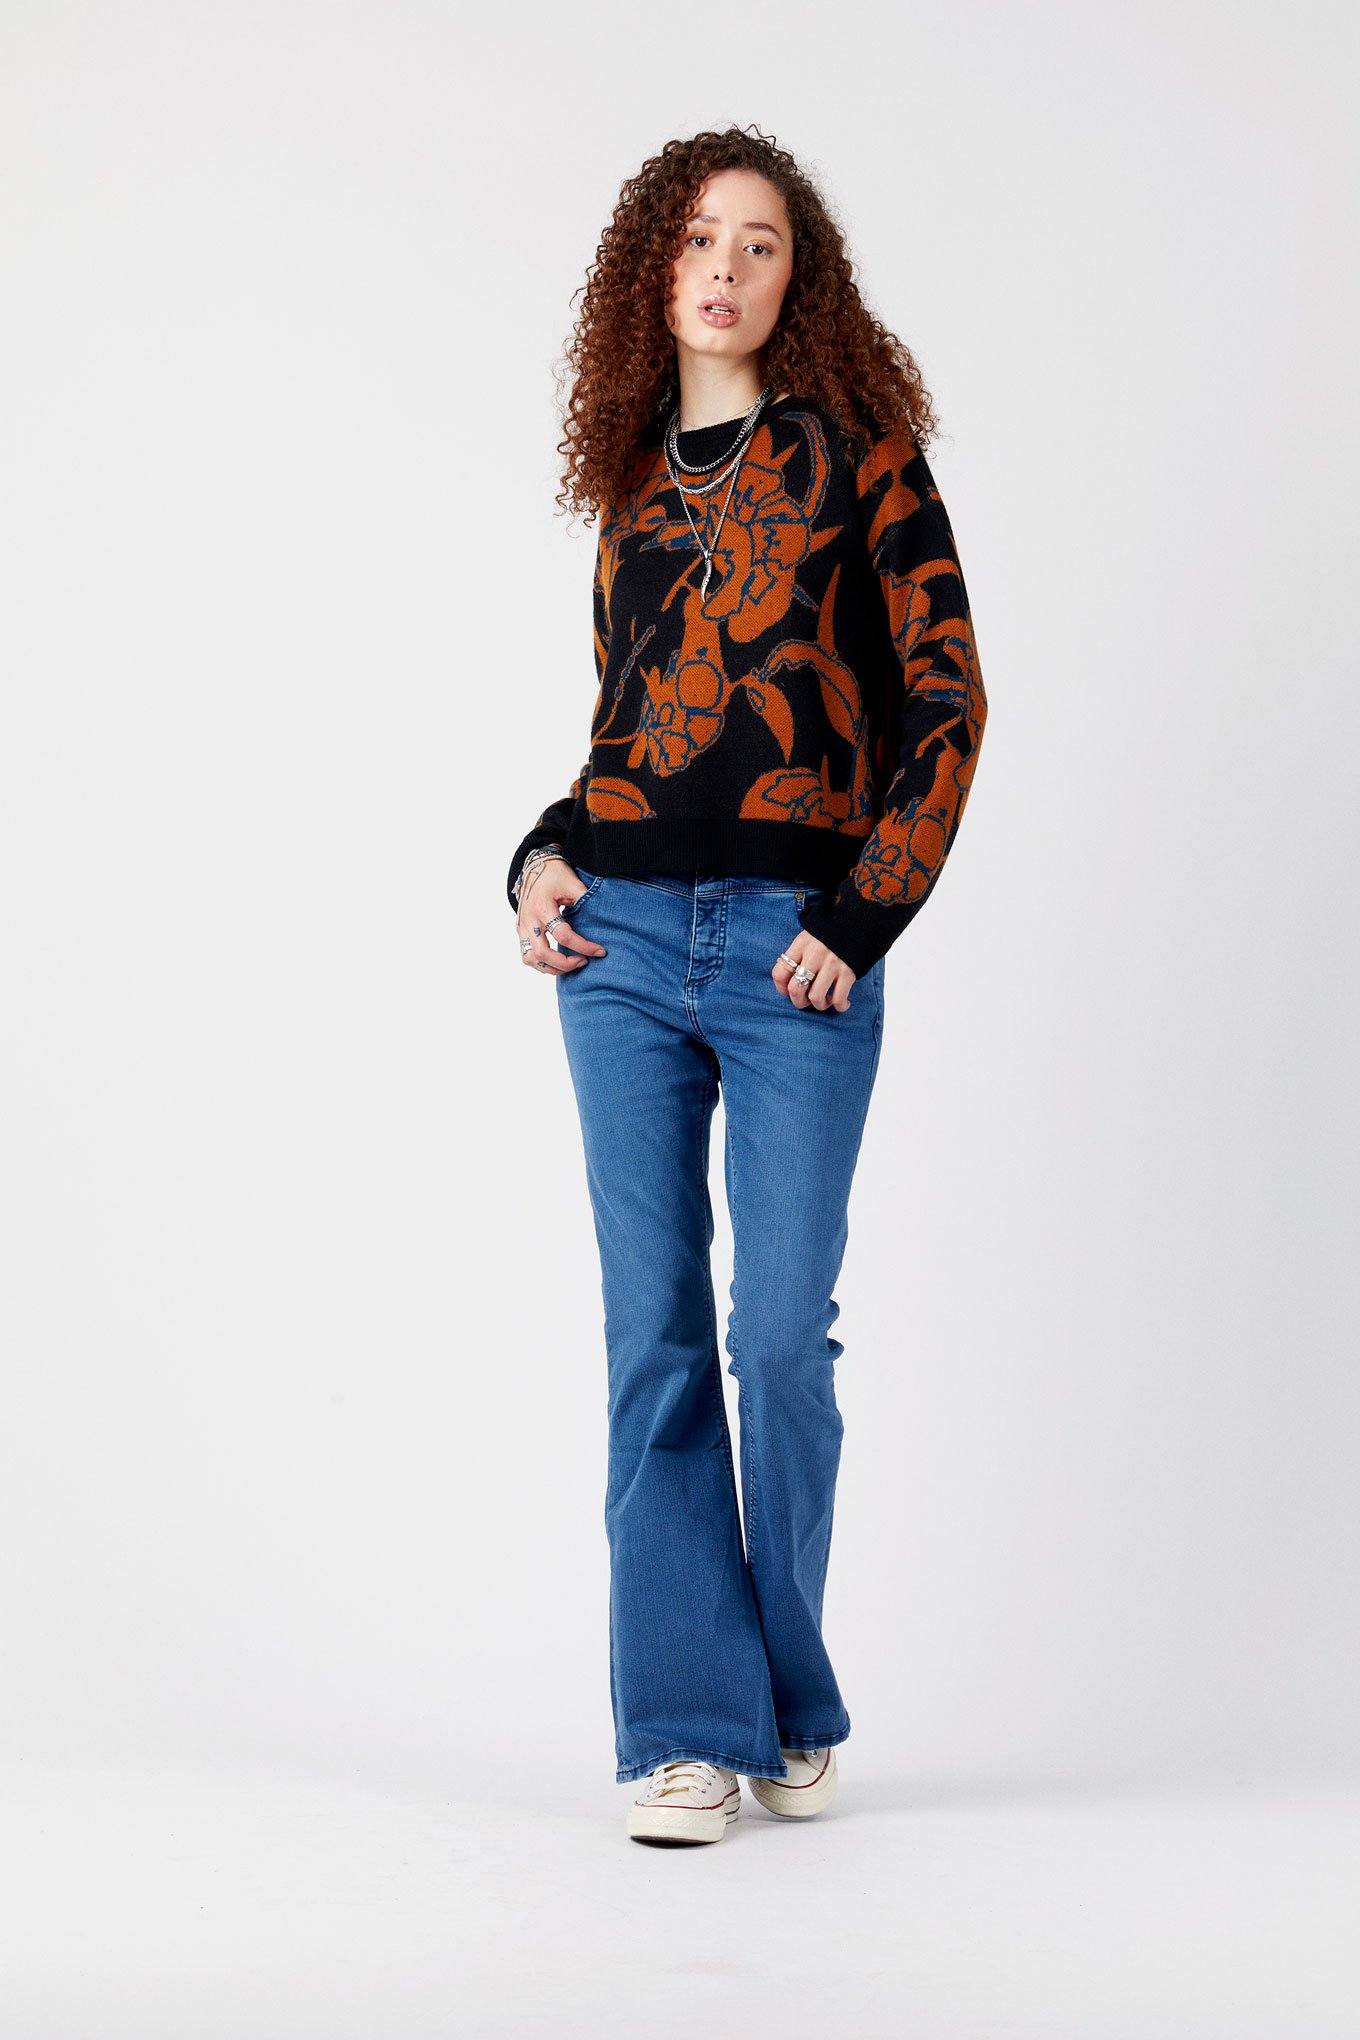 MAVIS Azure - GOTS Organic Cotton Jeans by Flax & Loom, 31 / Long